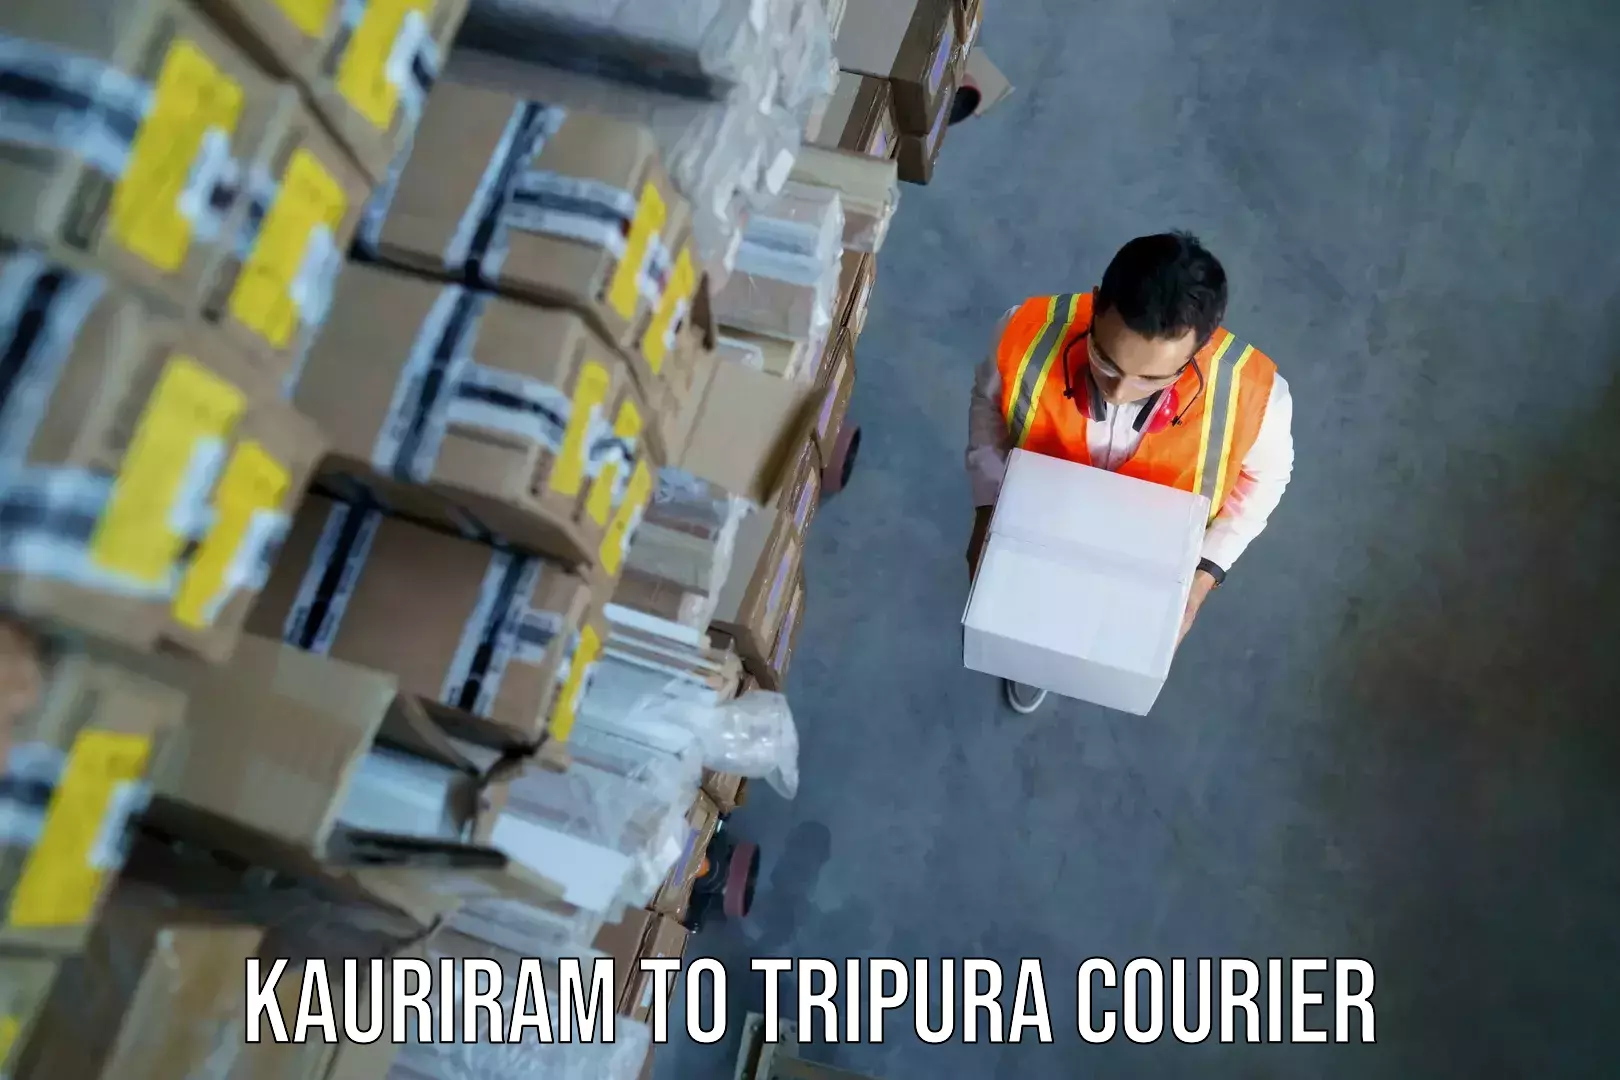 Baggage transport network Kauriram to North Tripura